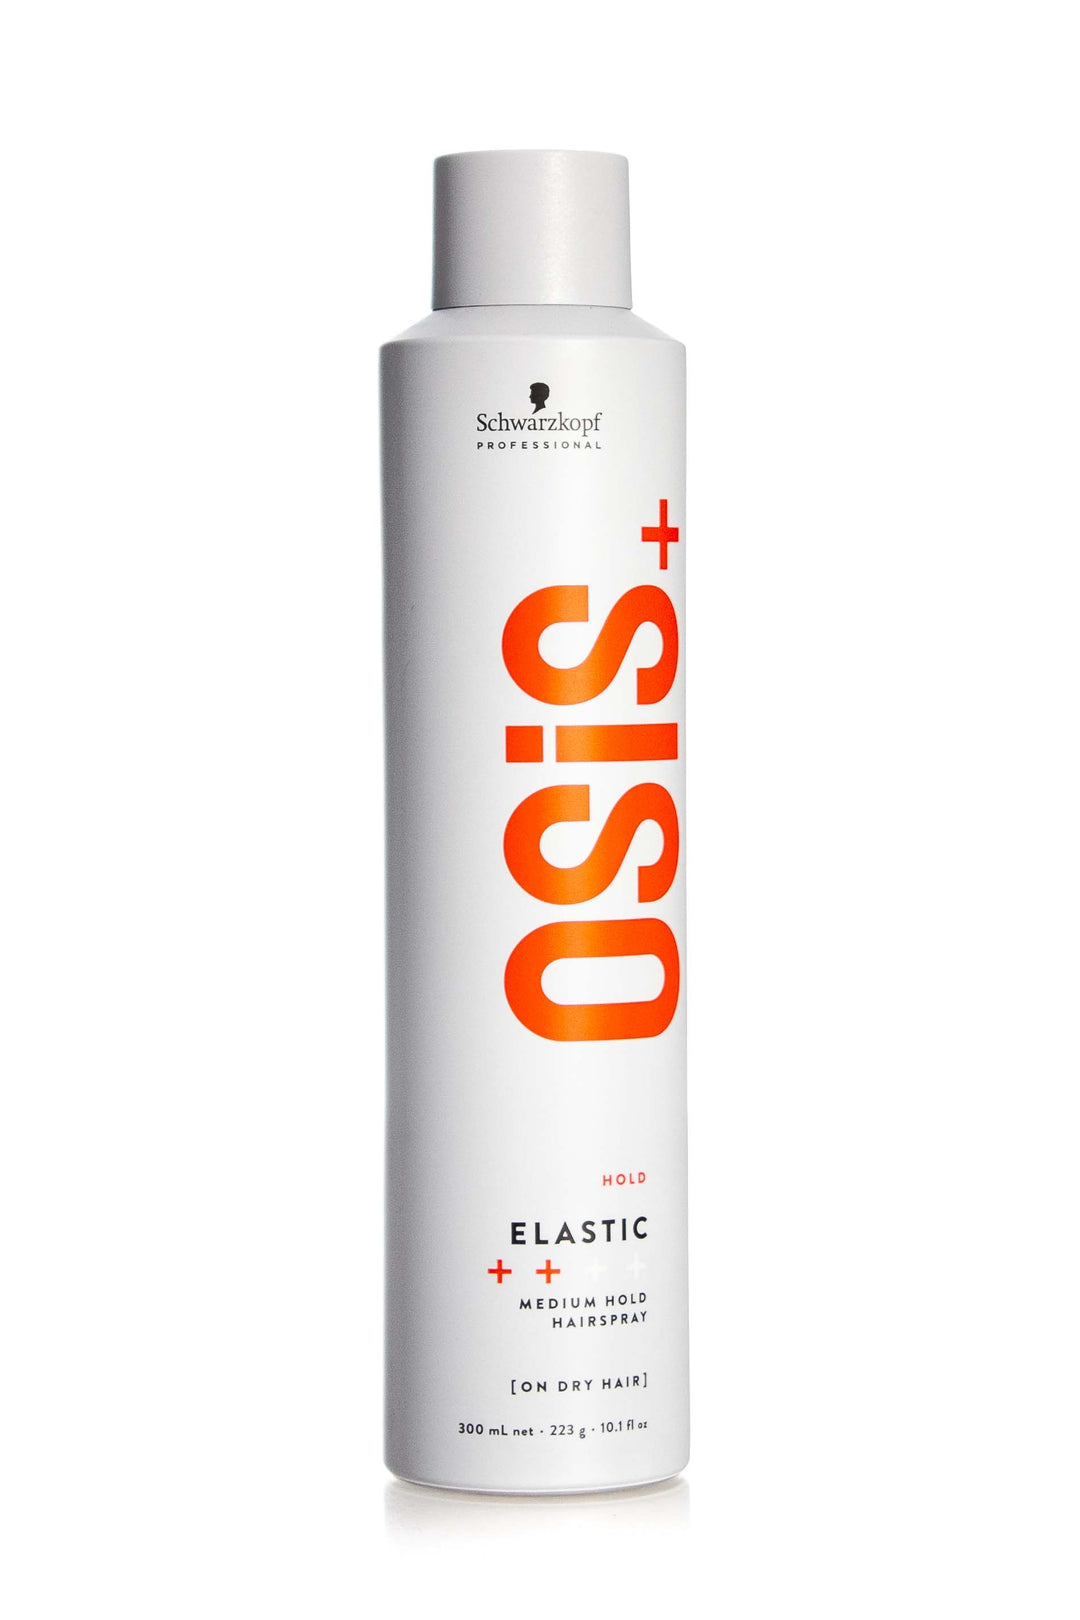 Schwarzkopf Osis+ Elastic Medium Hold Hairspray